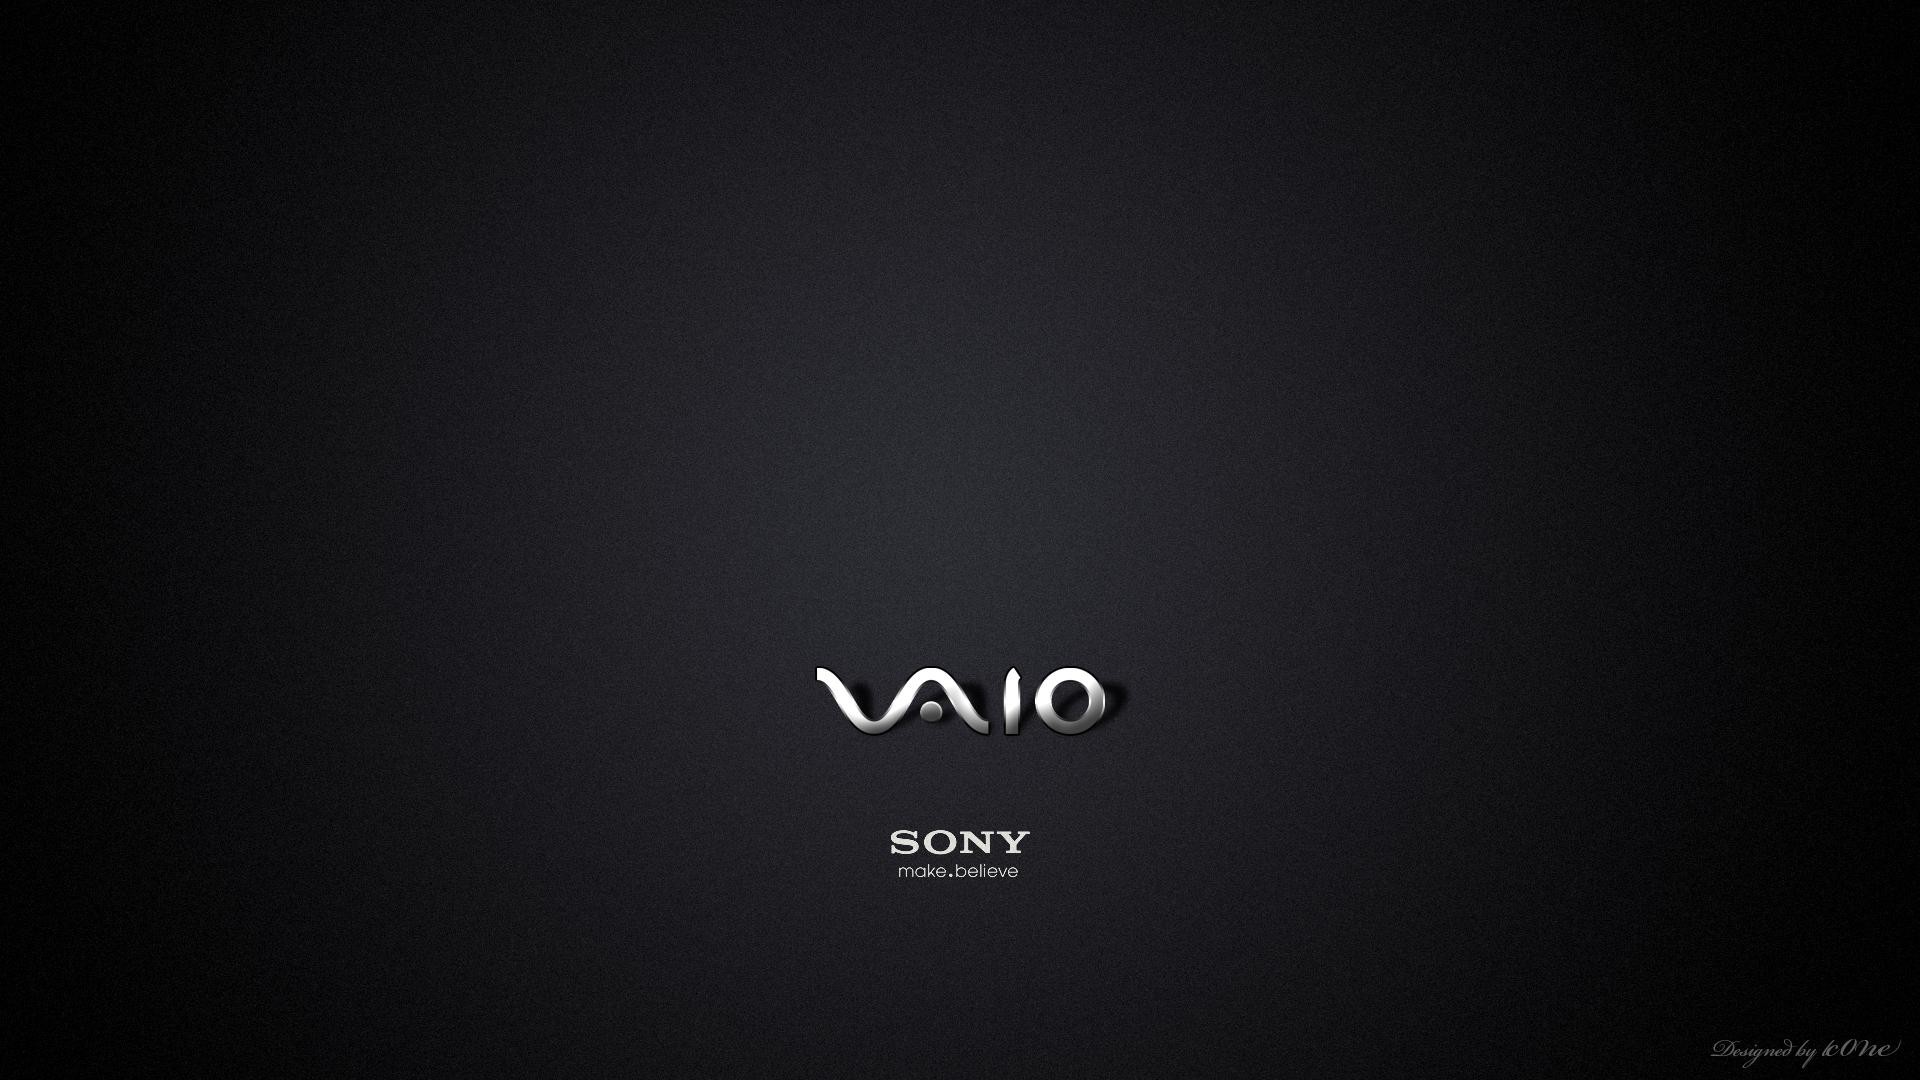 Sony Vaio Wallpaper 1080p 55 Images 3156